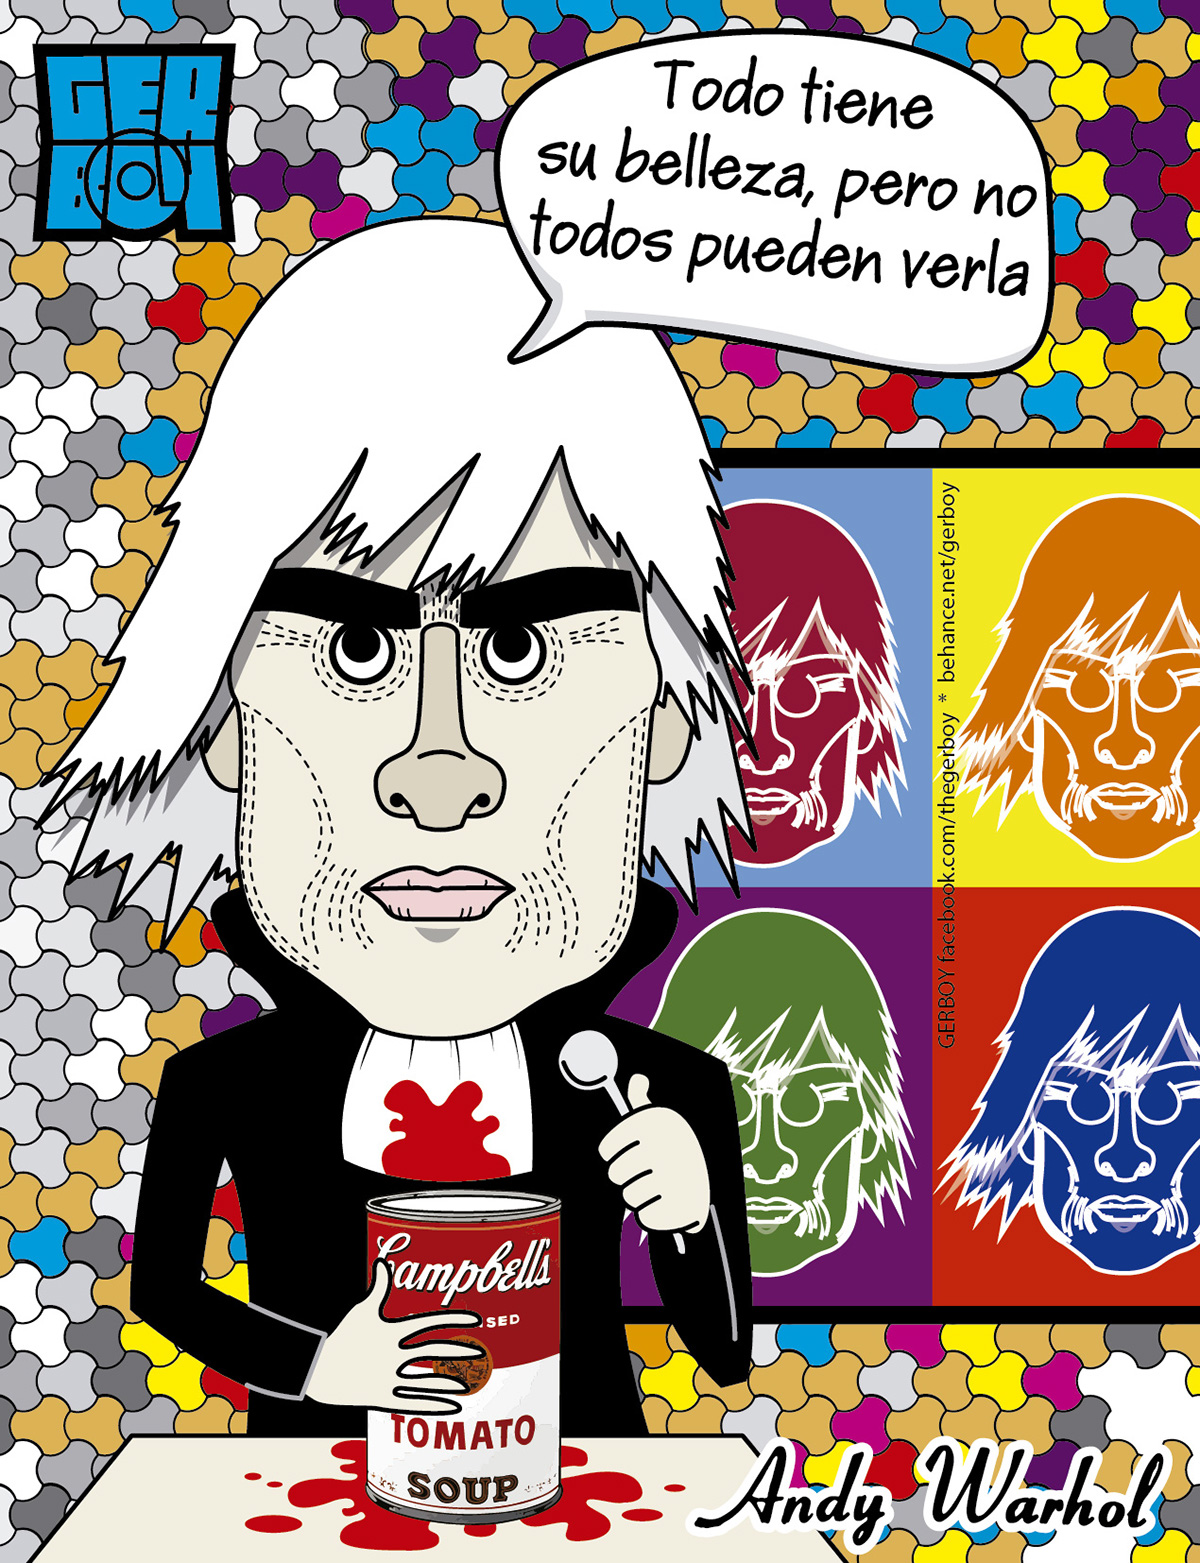 Andy Warhol Steve Jobs phillippe starck gerboy illustrationc colombia Cali Leonardo Da Vinci Karim Rashid Milton Glaser dibujos personajes